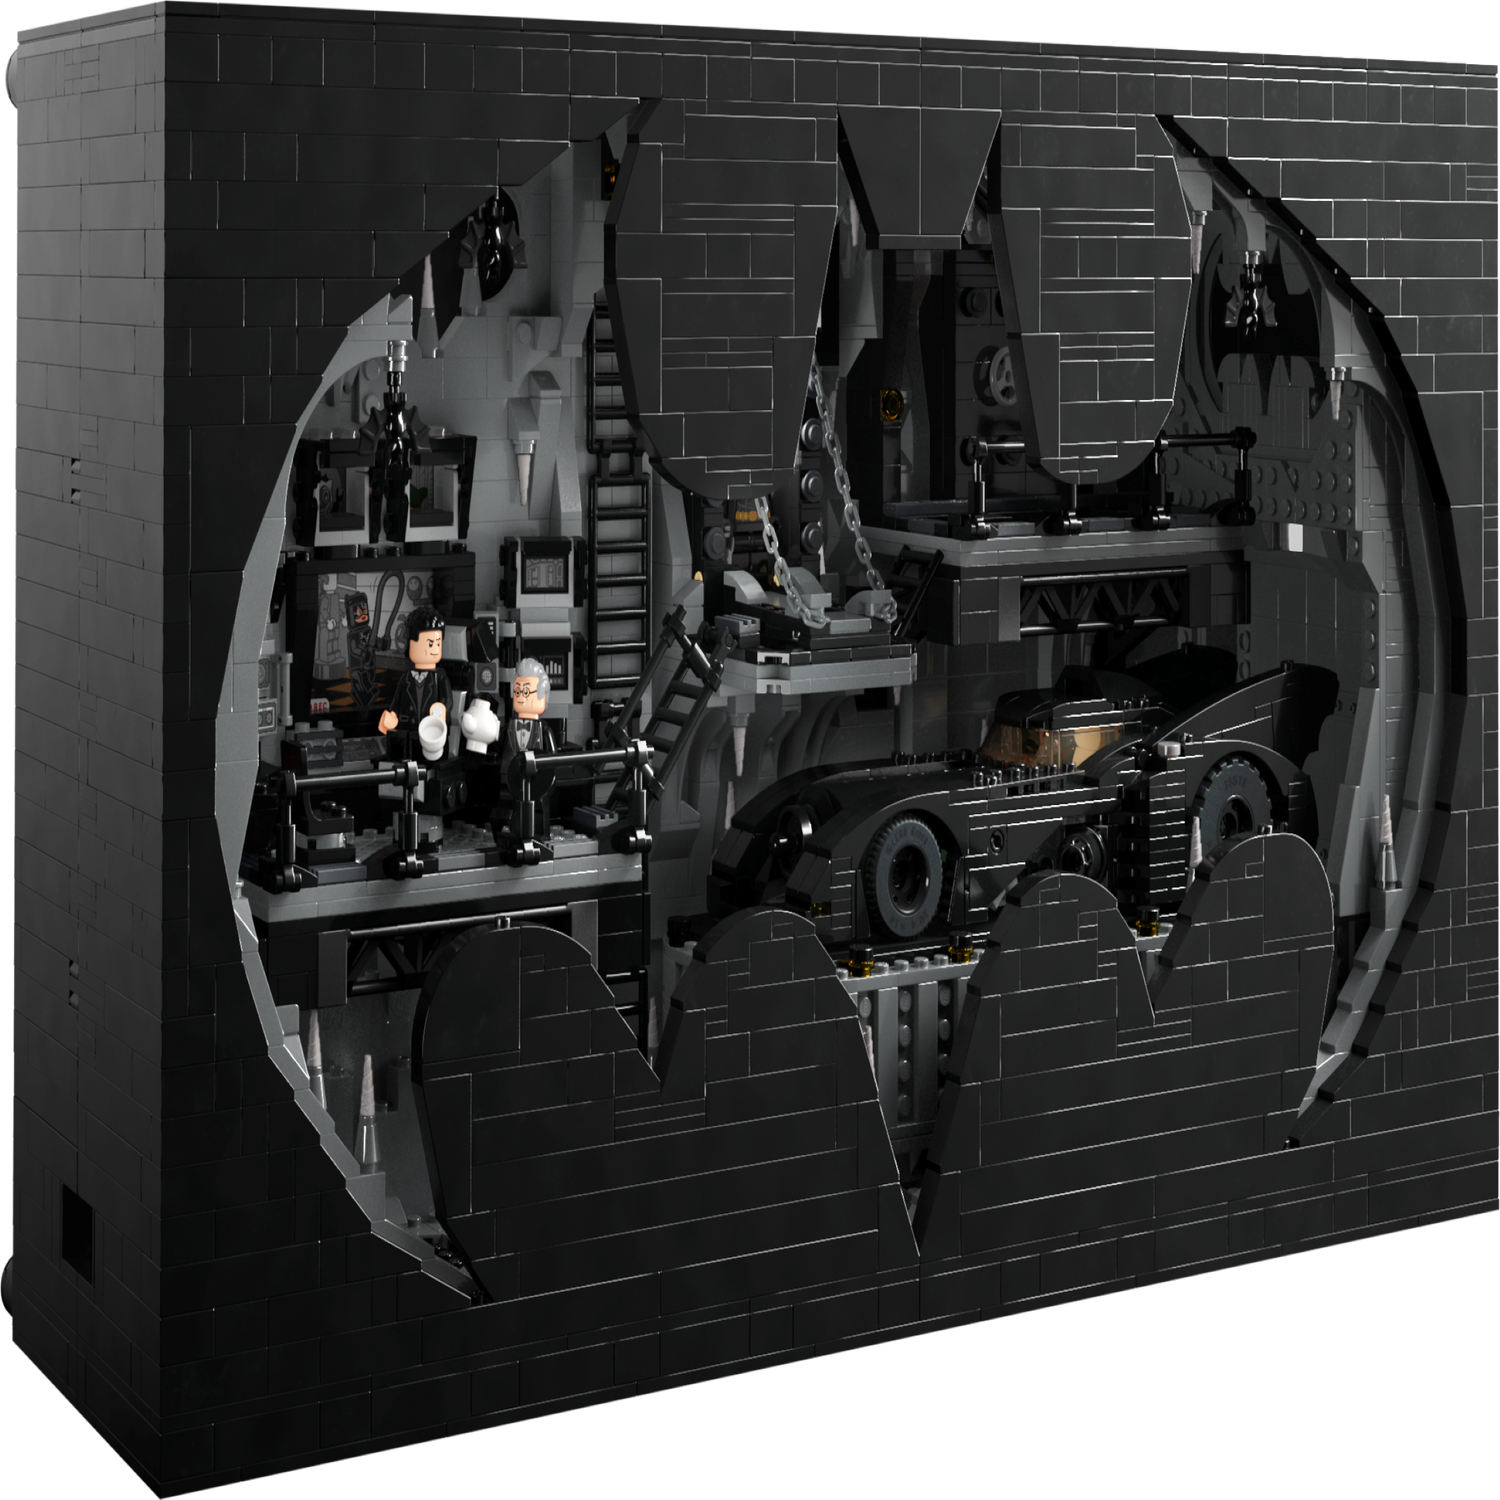 Batcave –  Shadow Box